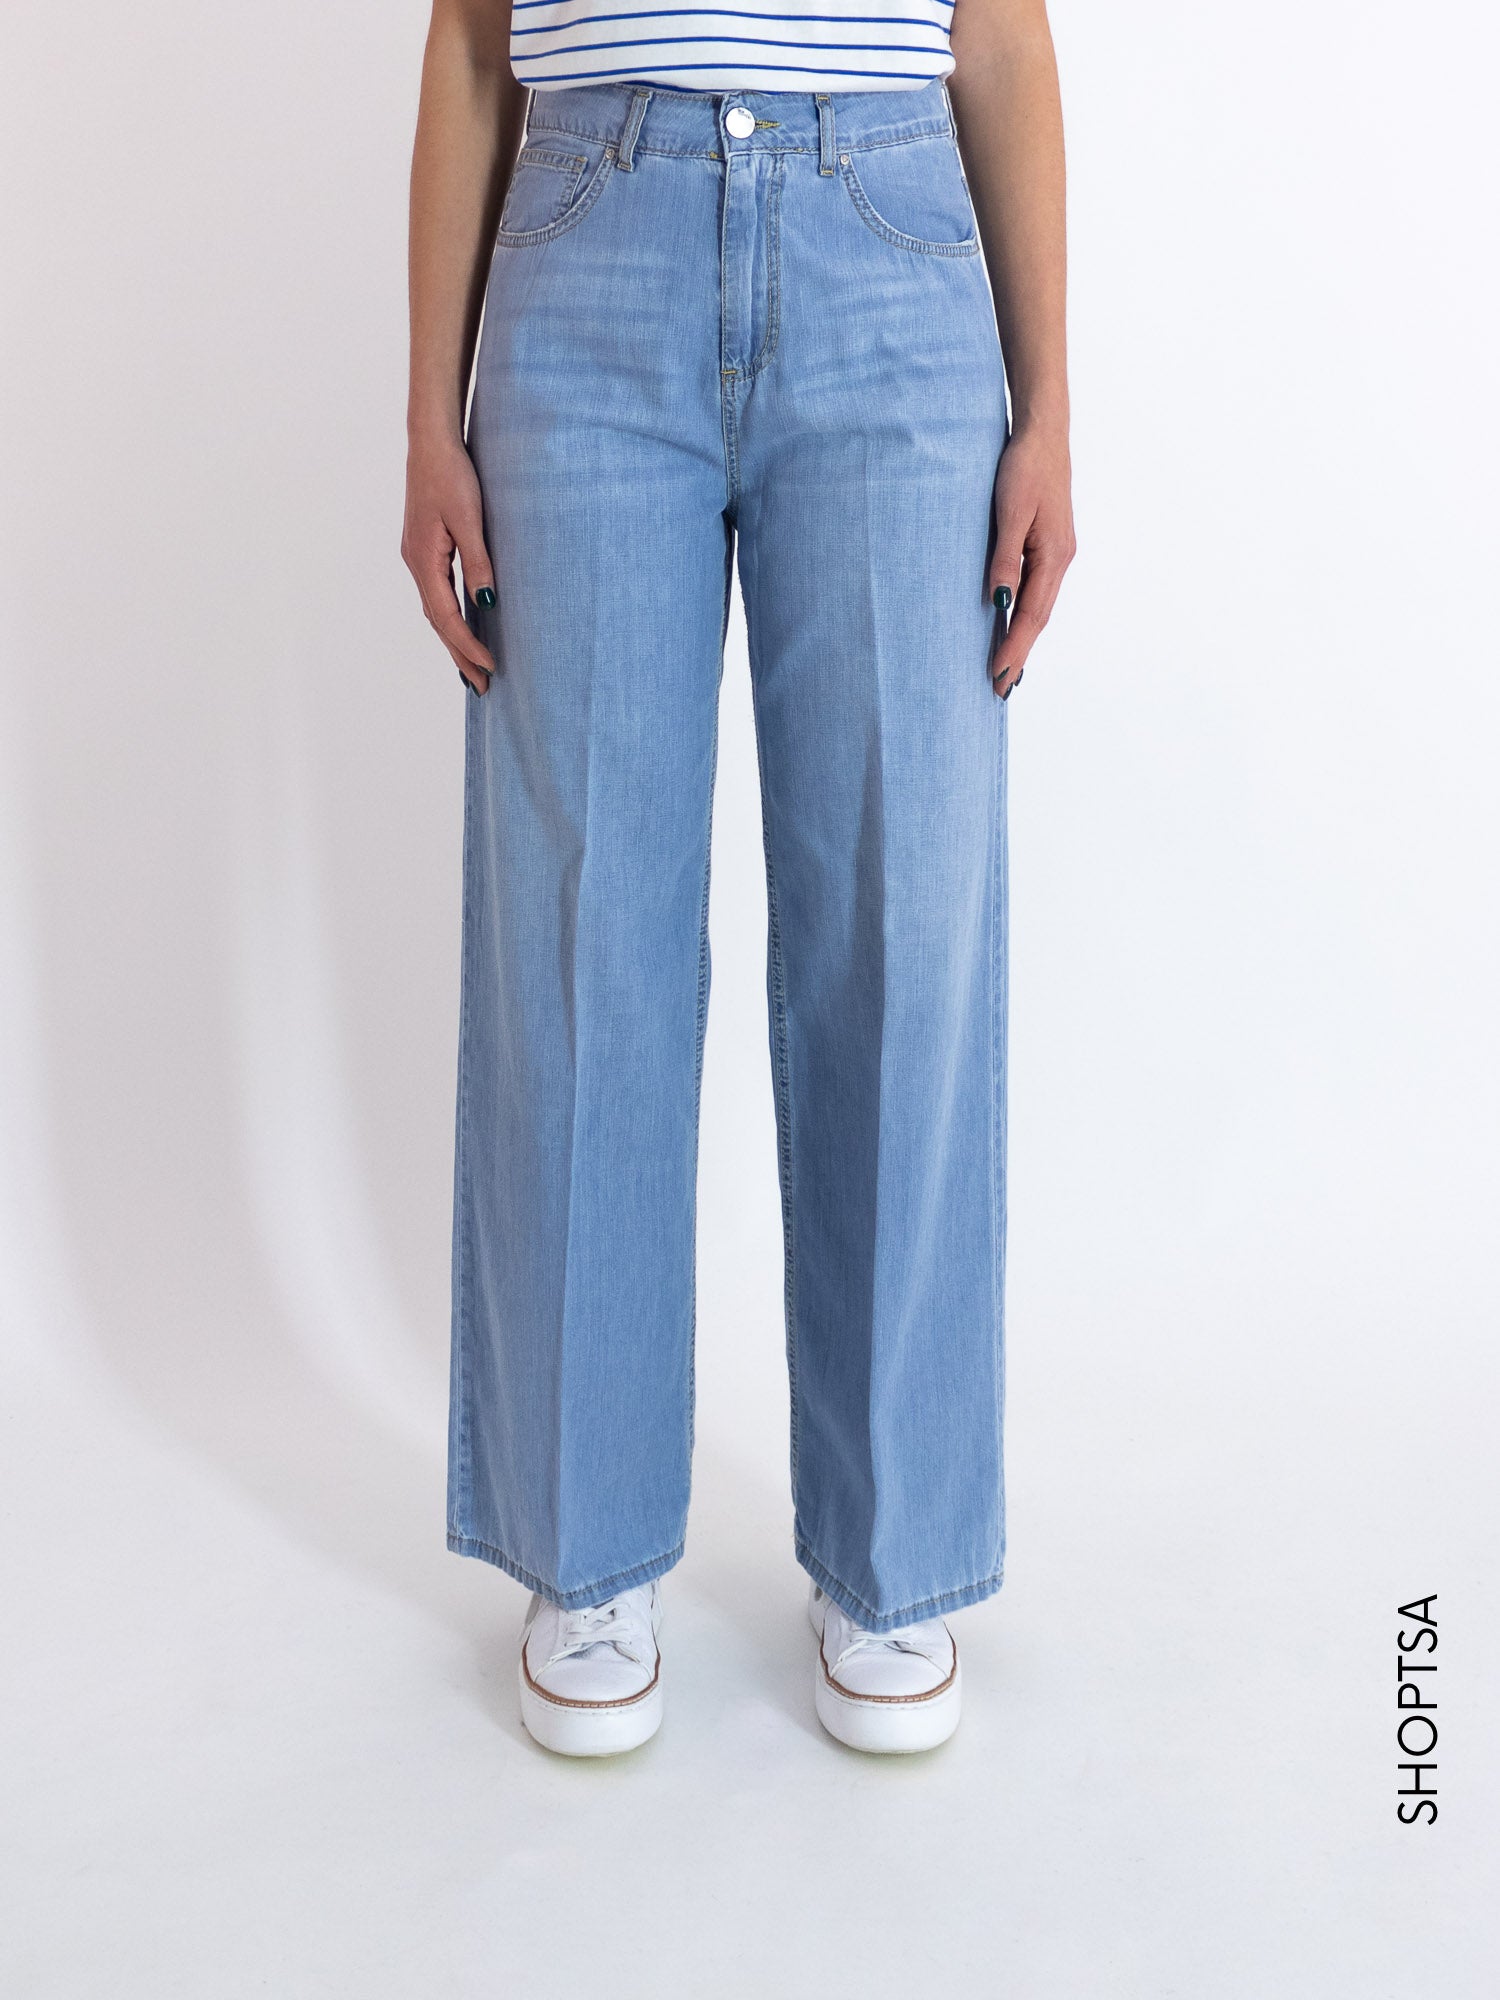 Jeans leggero palazzo - PRANI